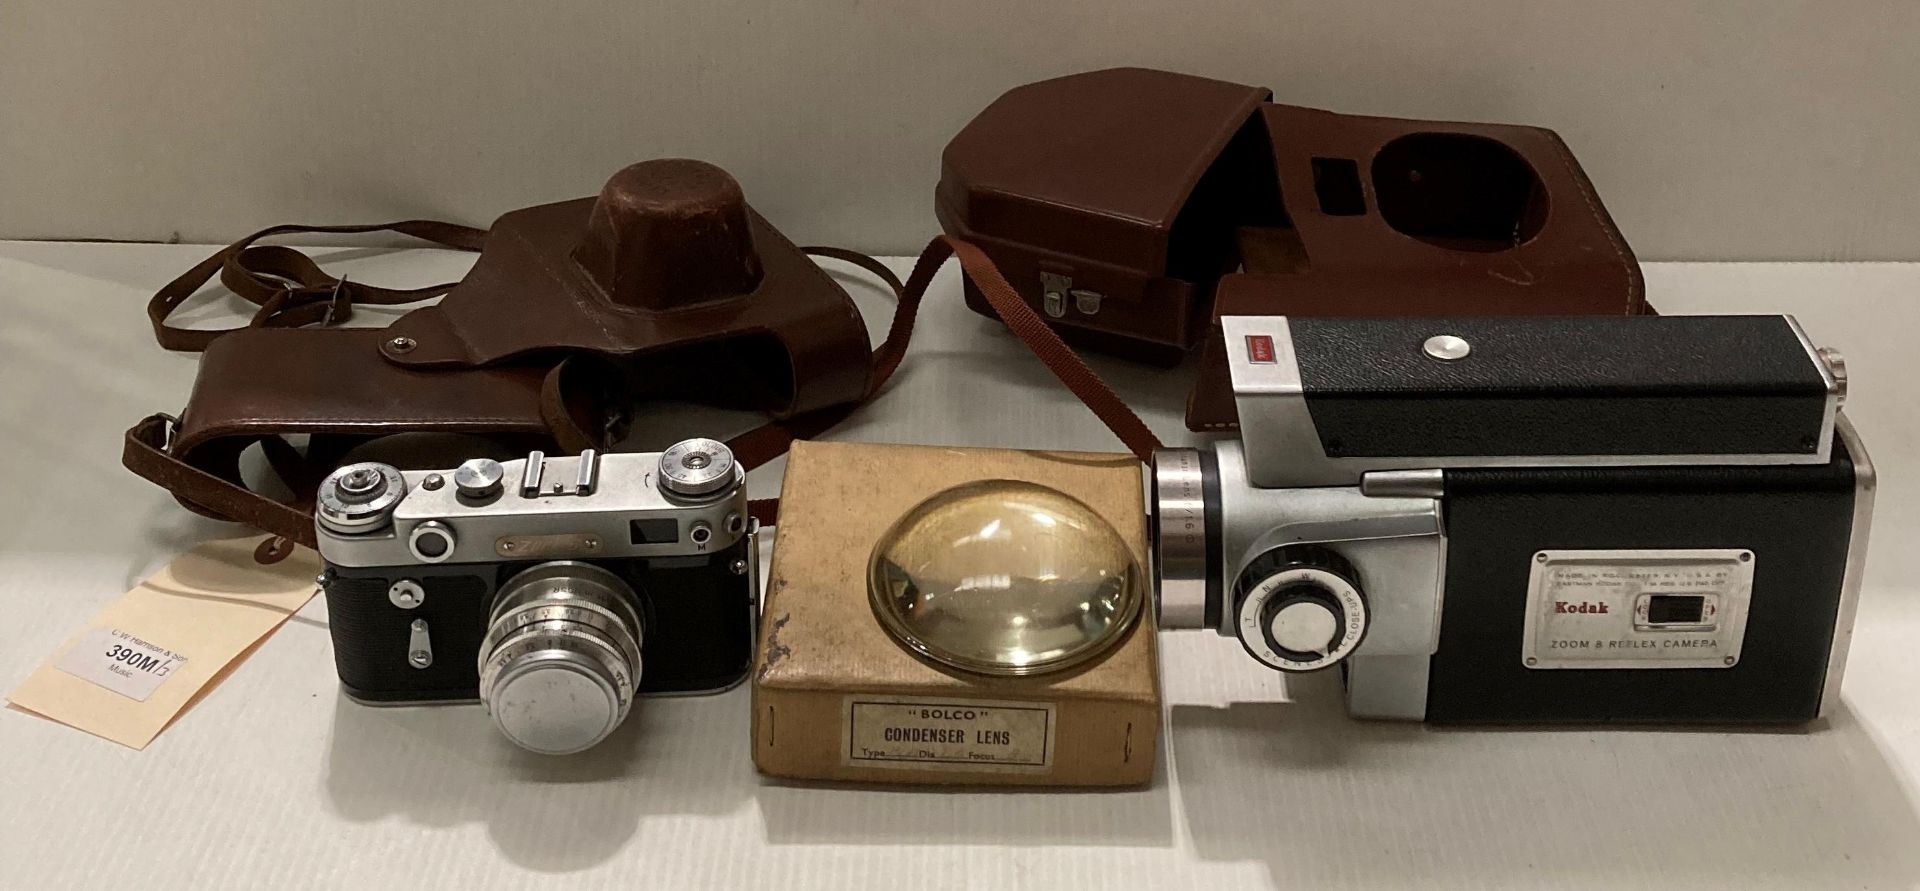 A Kodak Spool camera model 300m reflex F 1.6 in case, a 'Bolco' condenser lens and a Zorki 6 F 3.